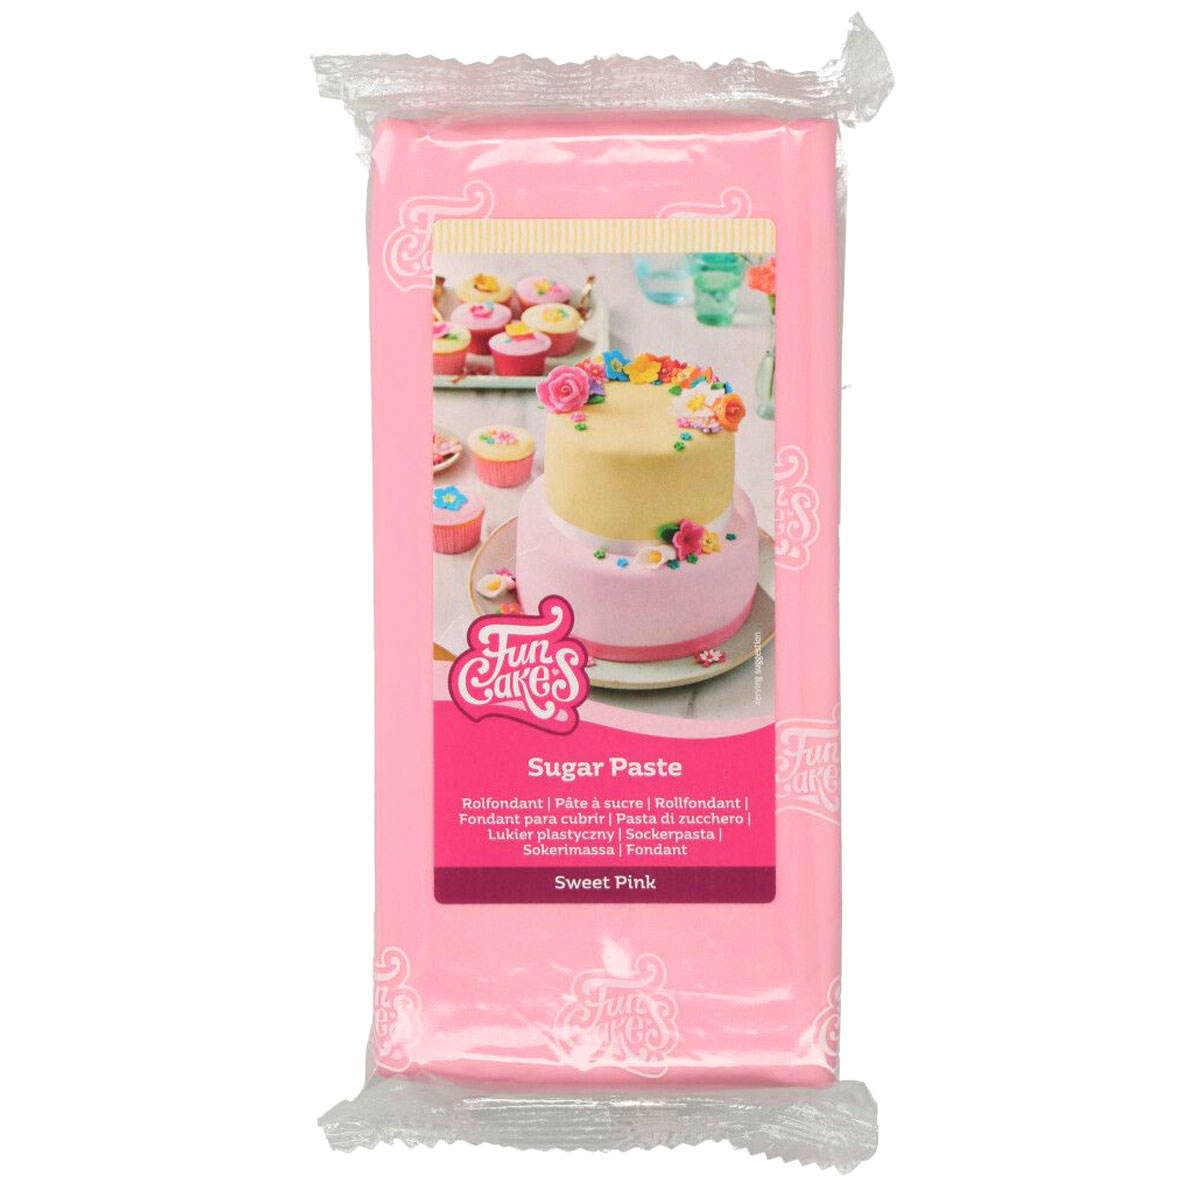 Funcakes Rollfondant Sweet Pink - 1Kg